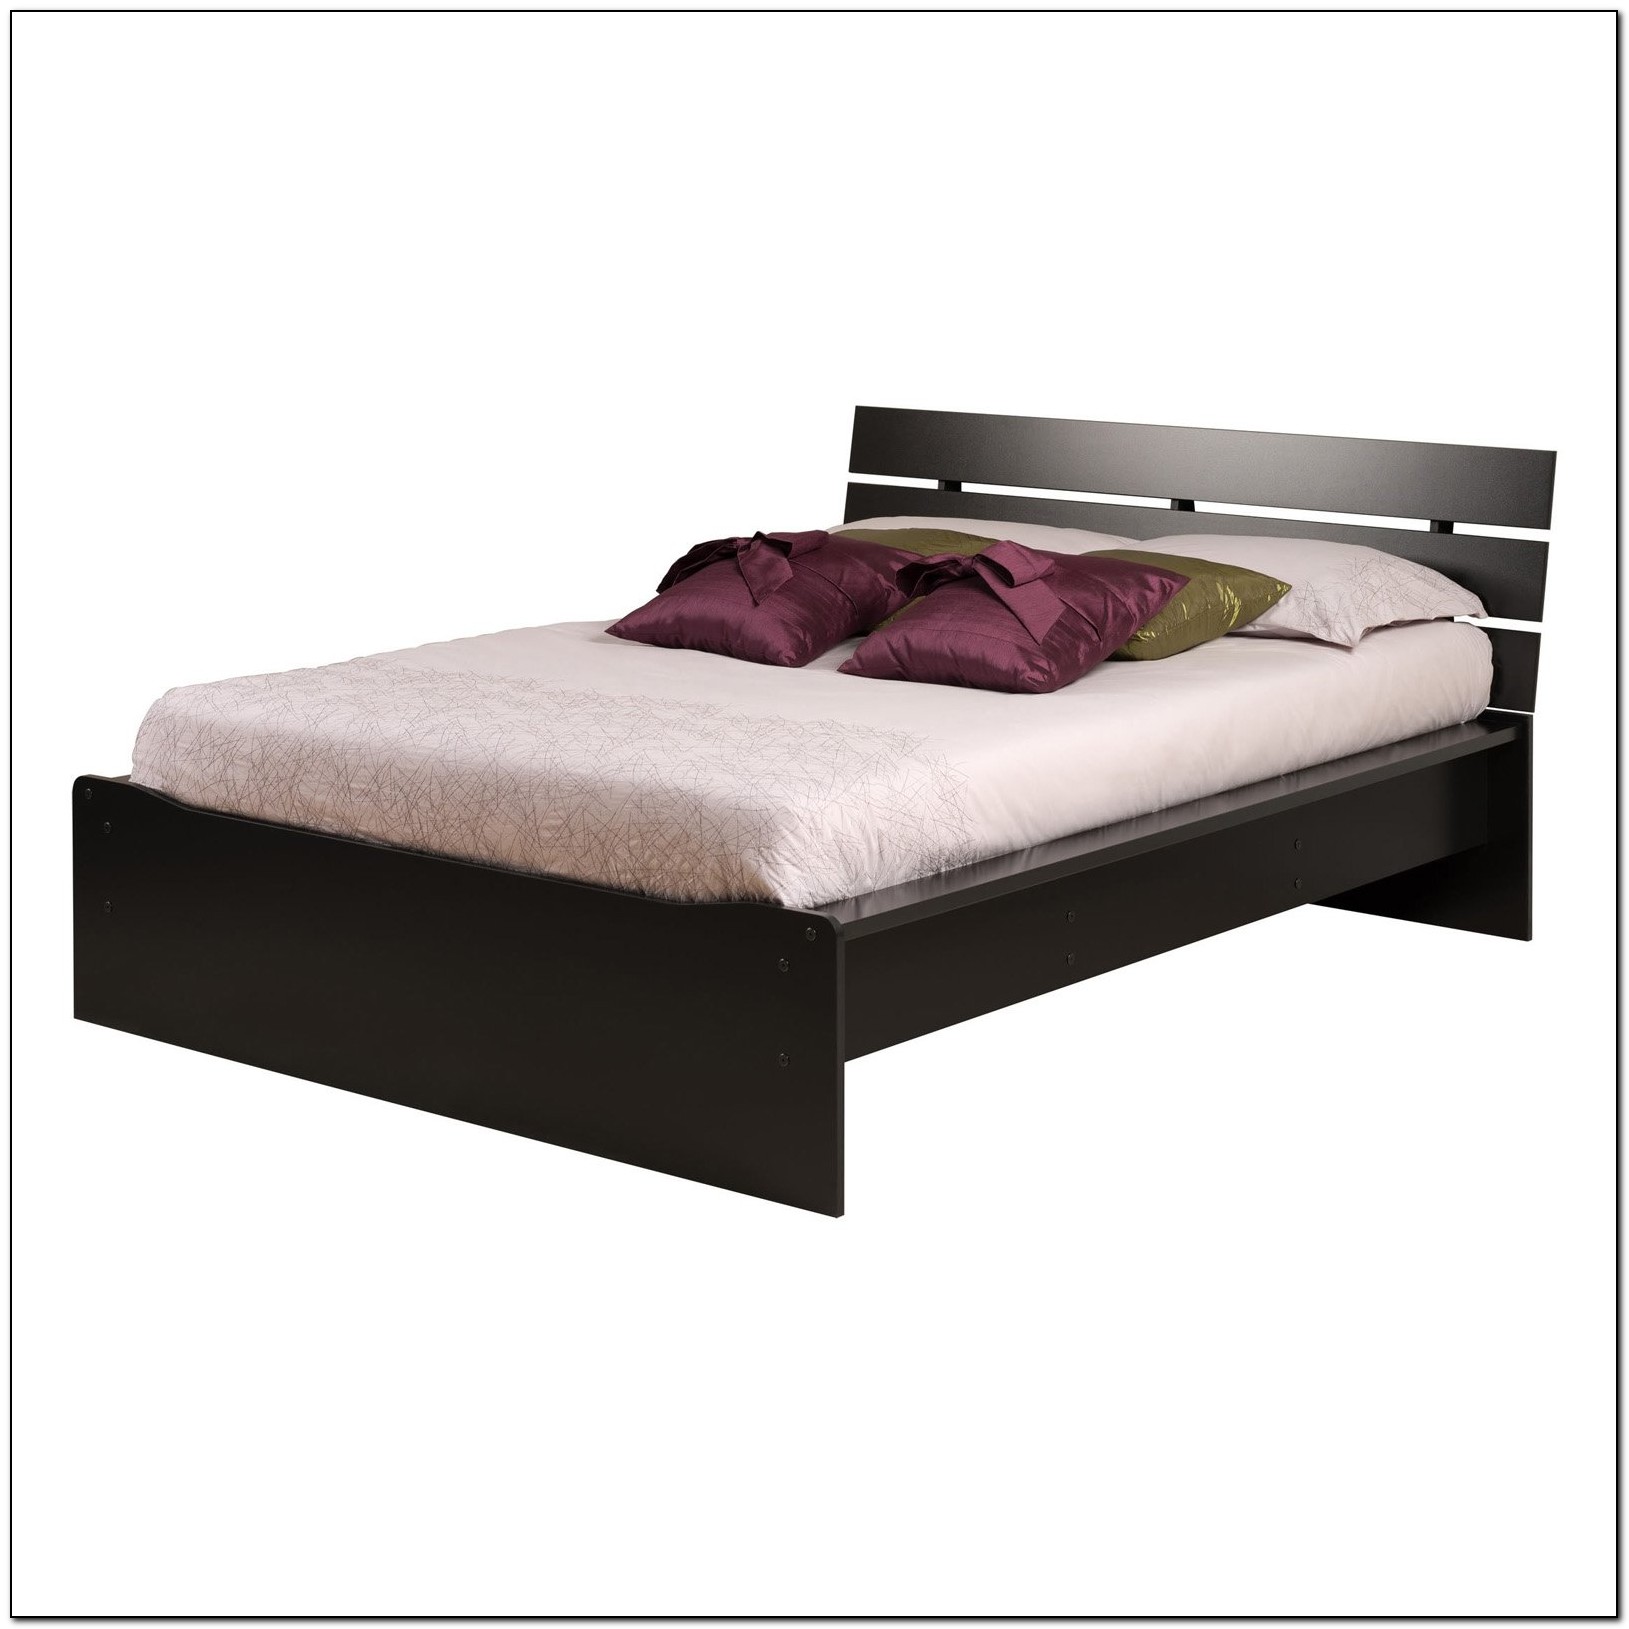 Black Platform Bed With Headboard